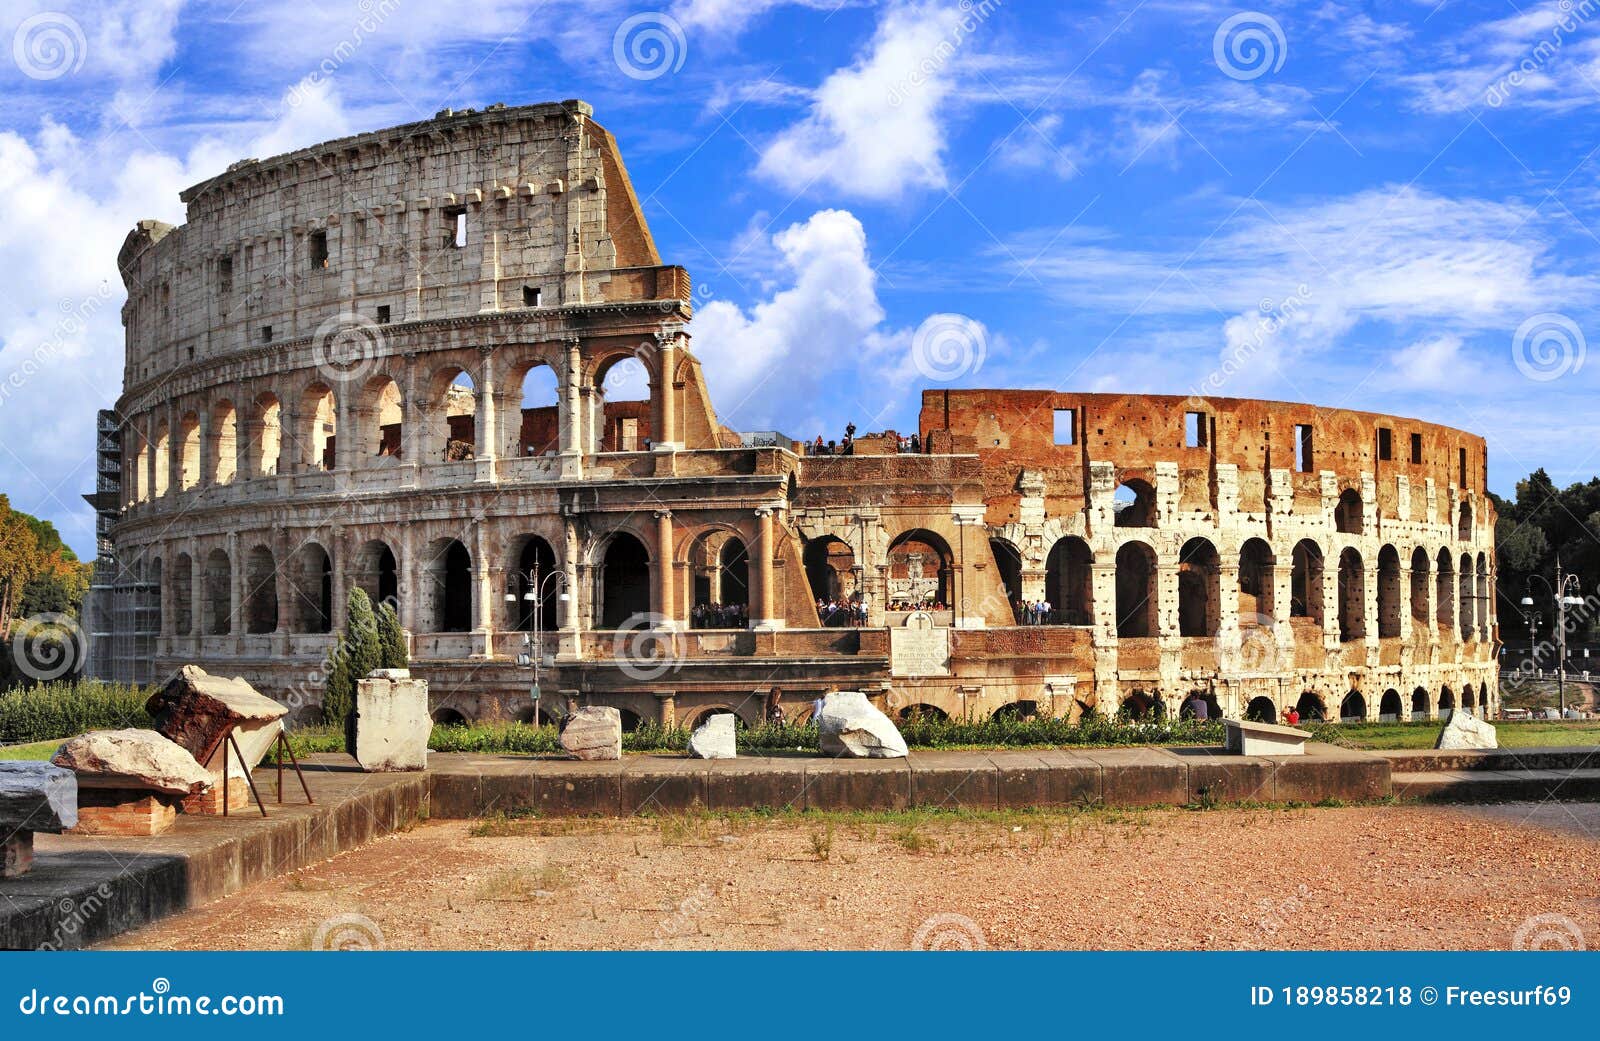 landmarks of rome - colosseum, italy